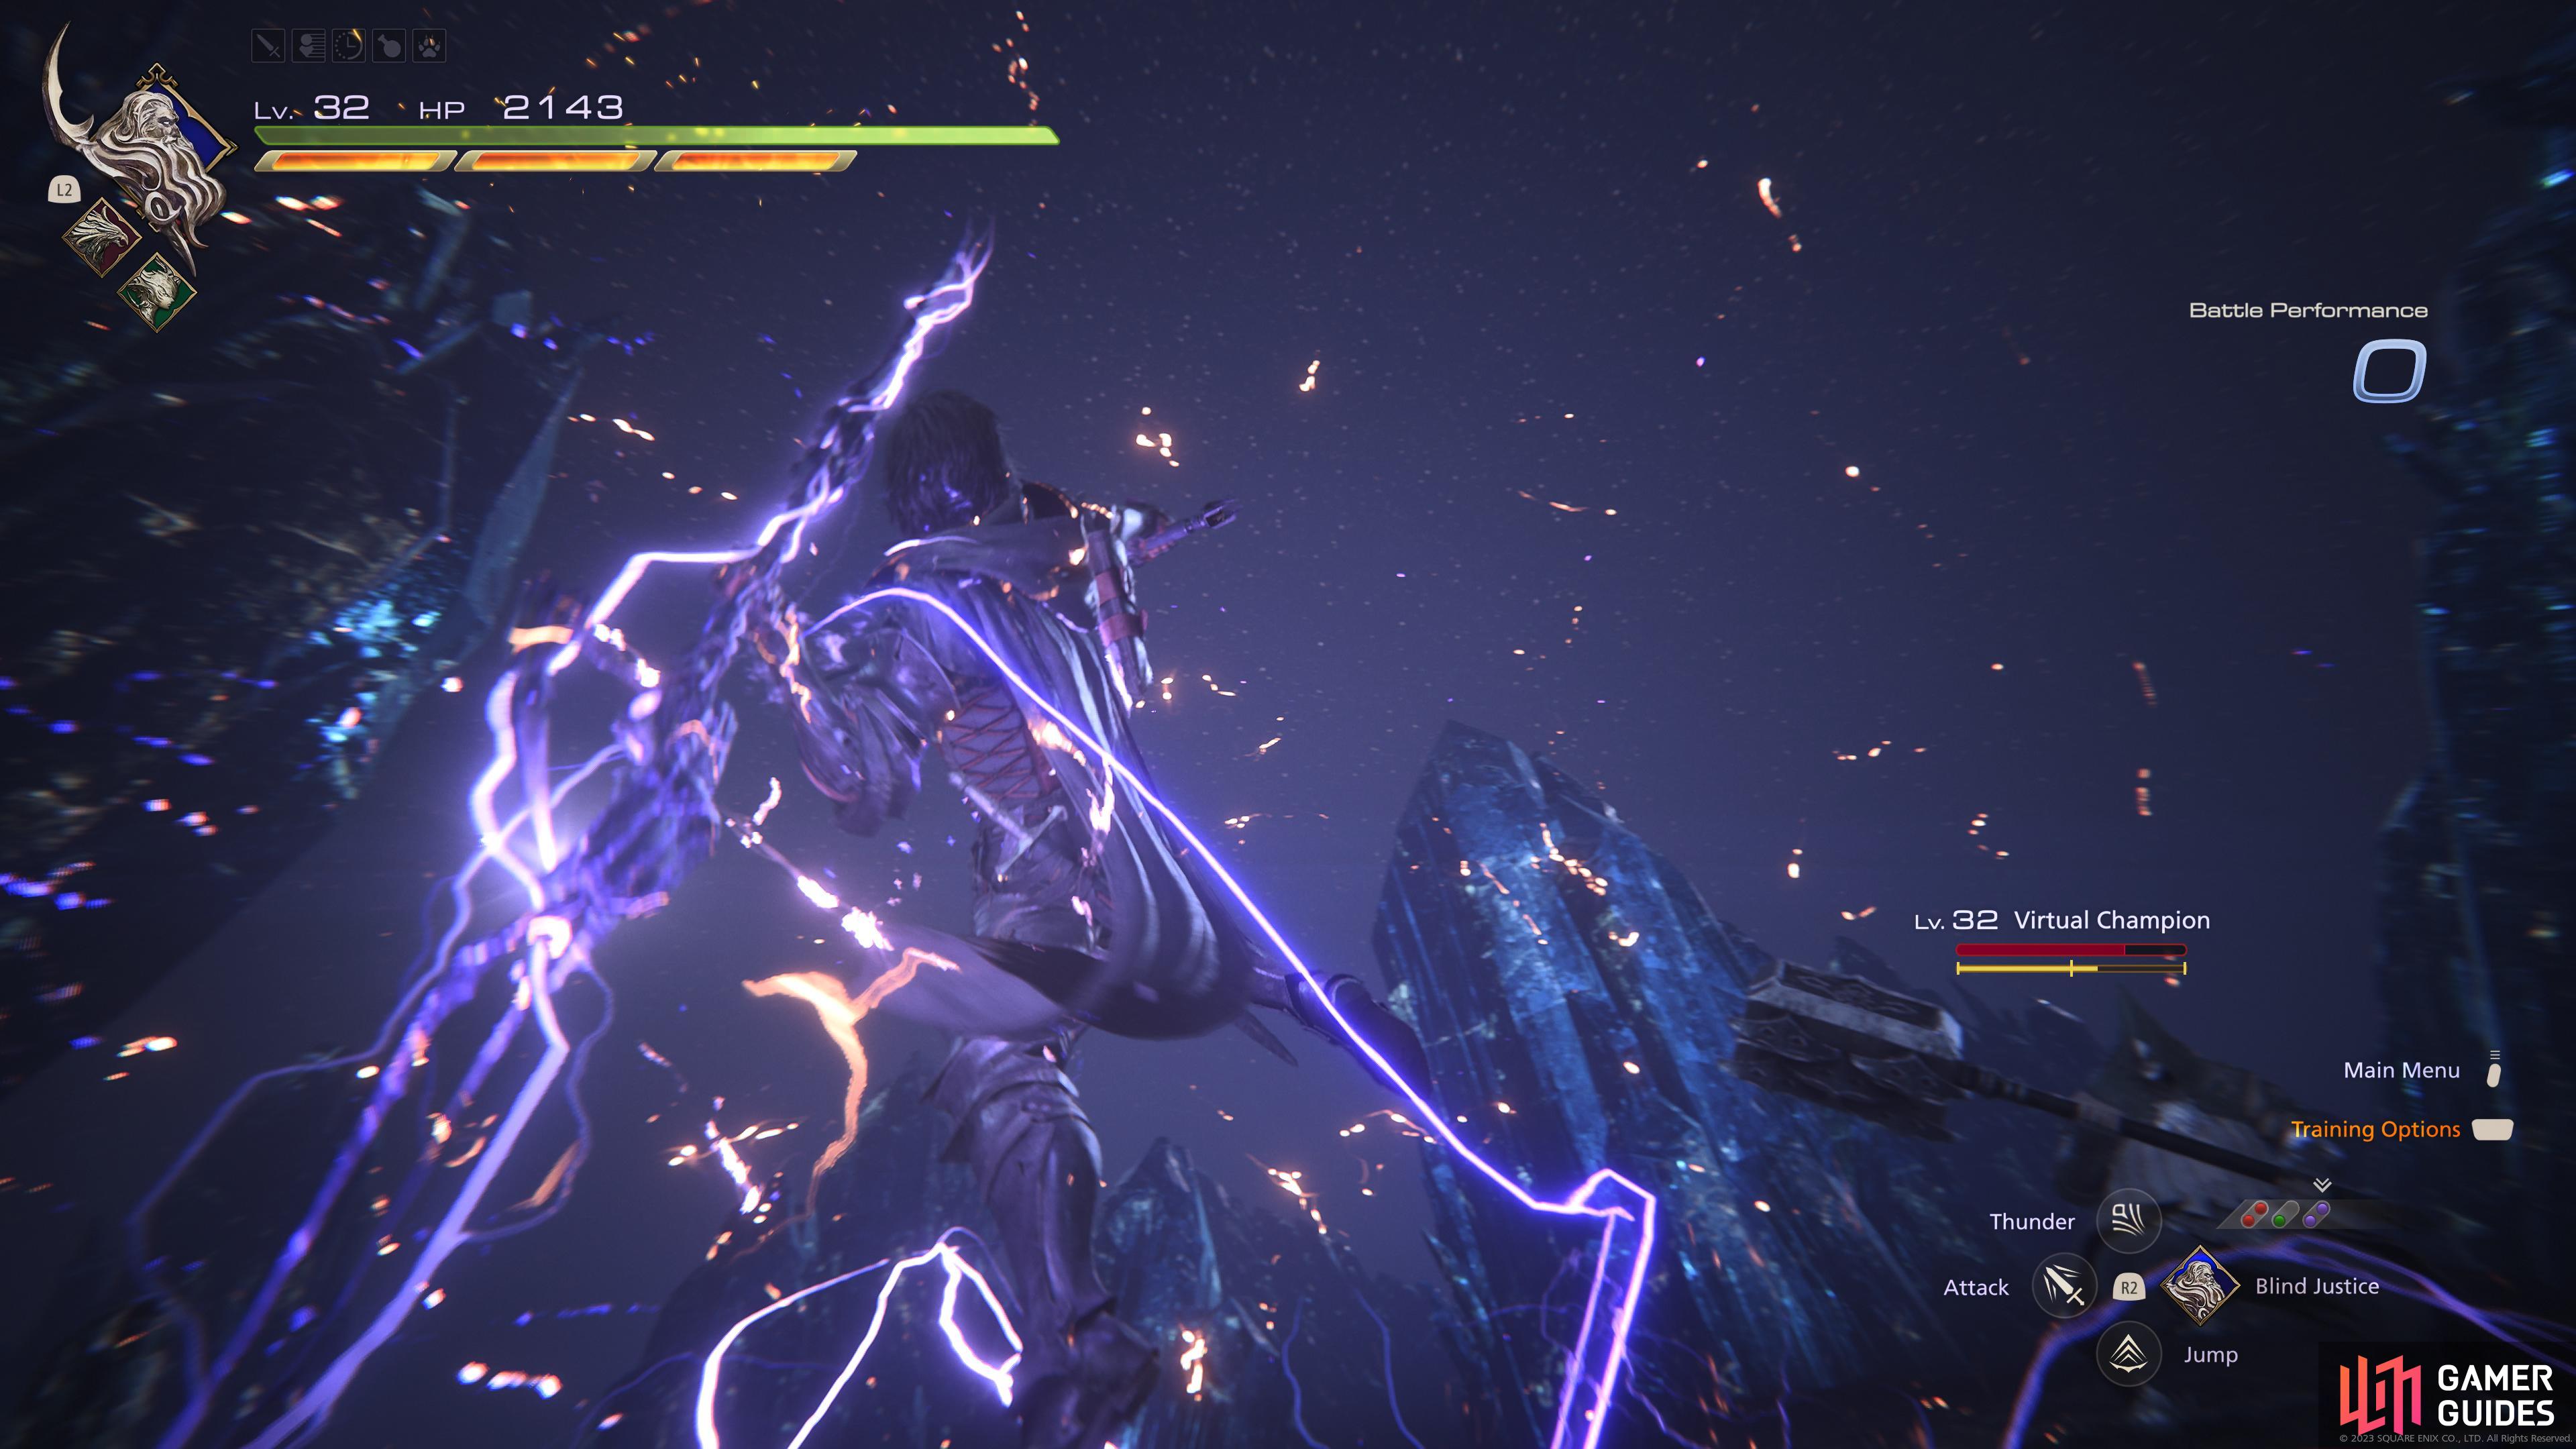 !Ramuh’s Eikonic abilities focus on the power of lightning.